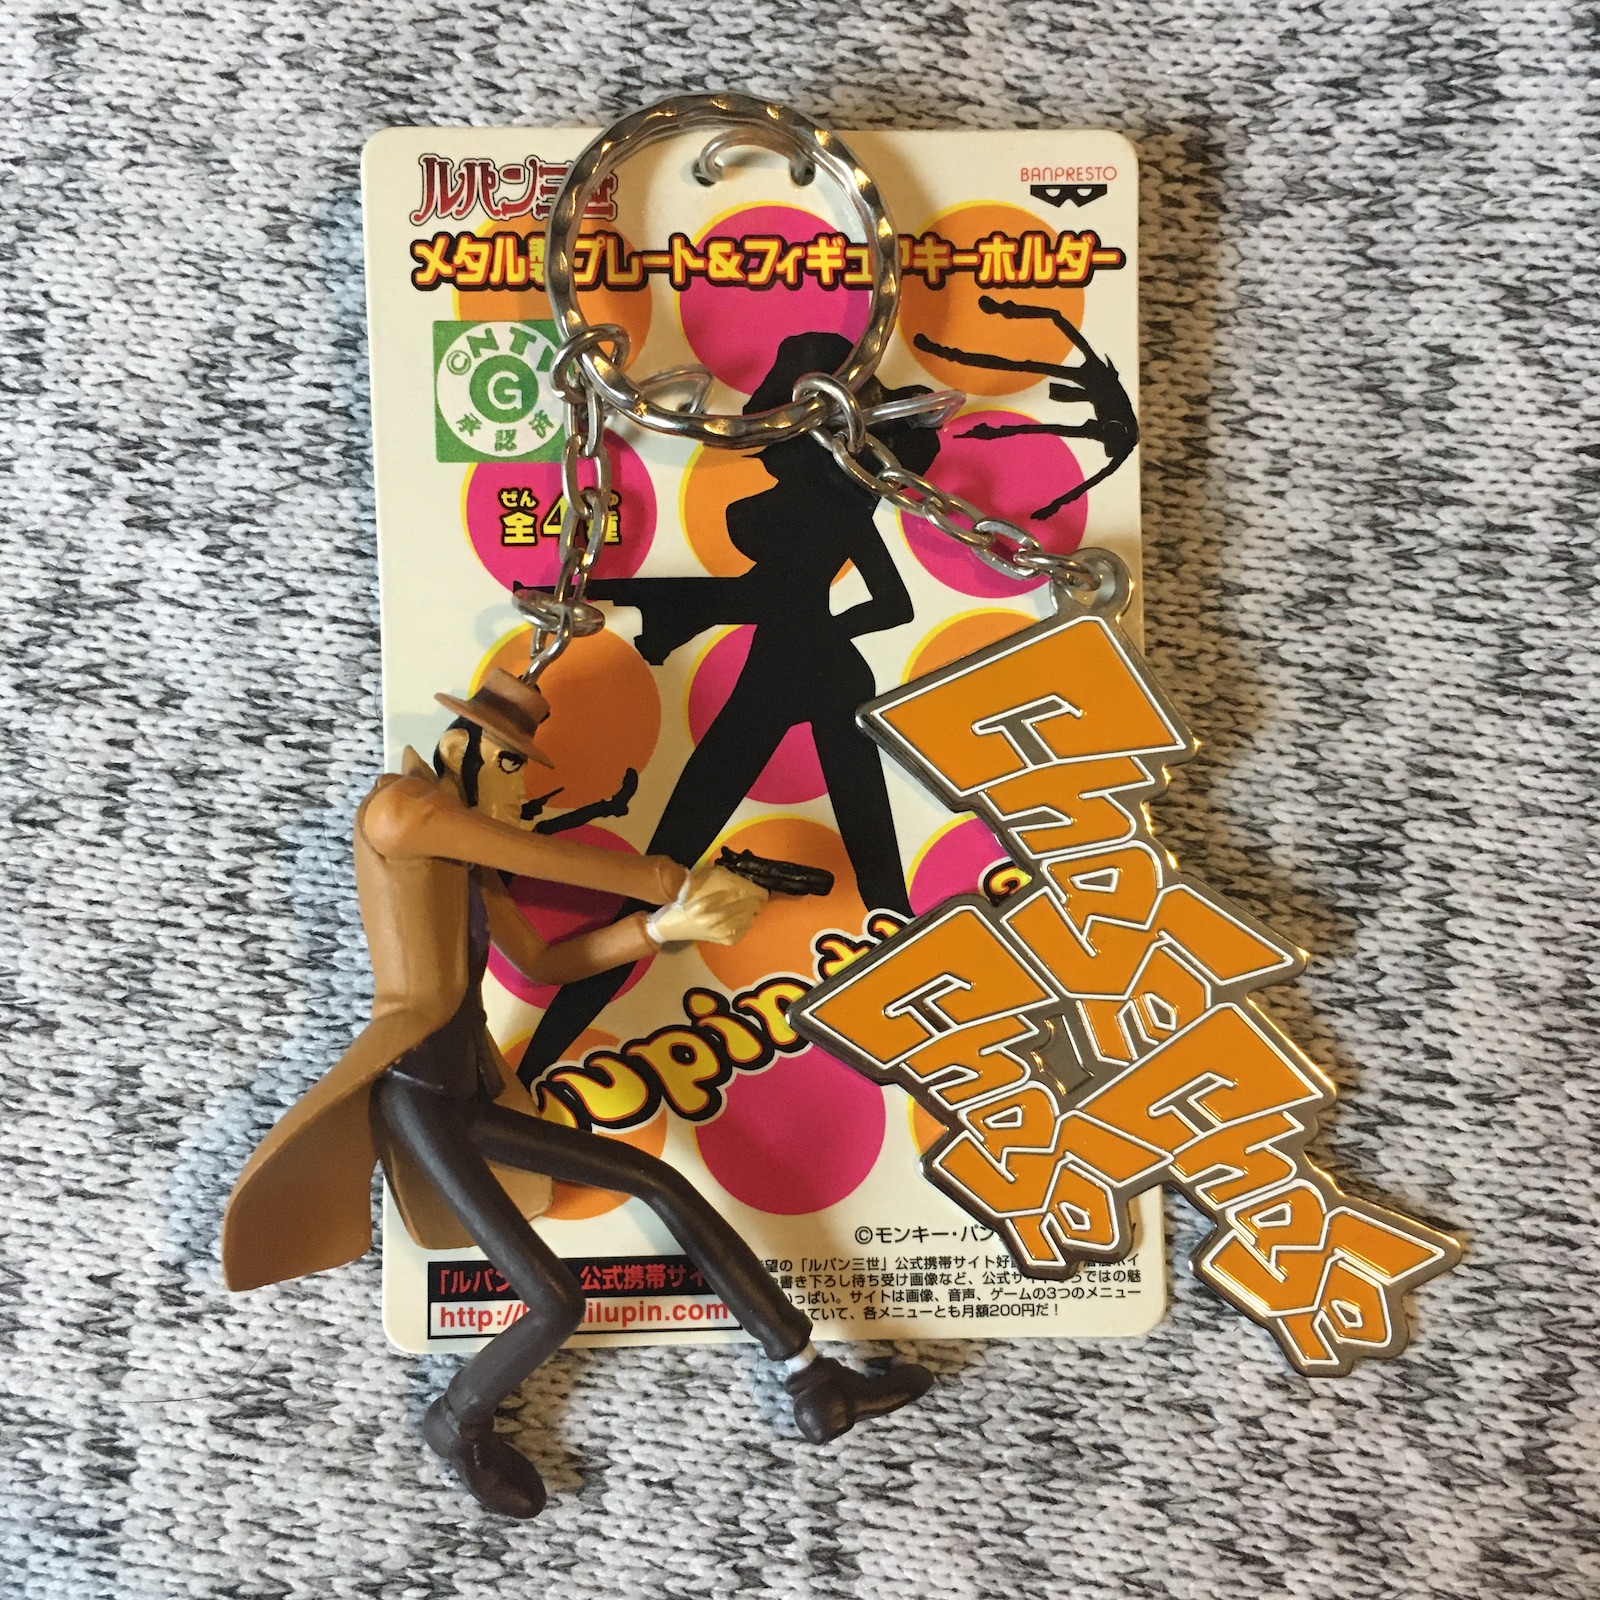 Zenigata plastic figure keychain.